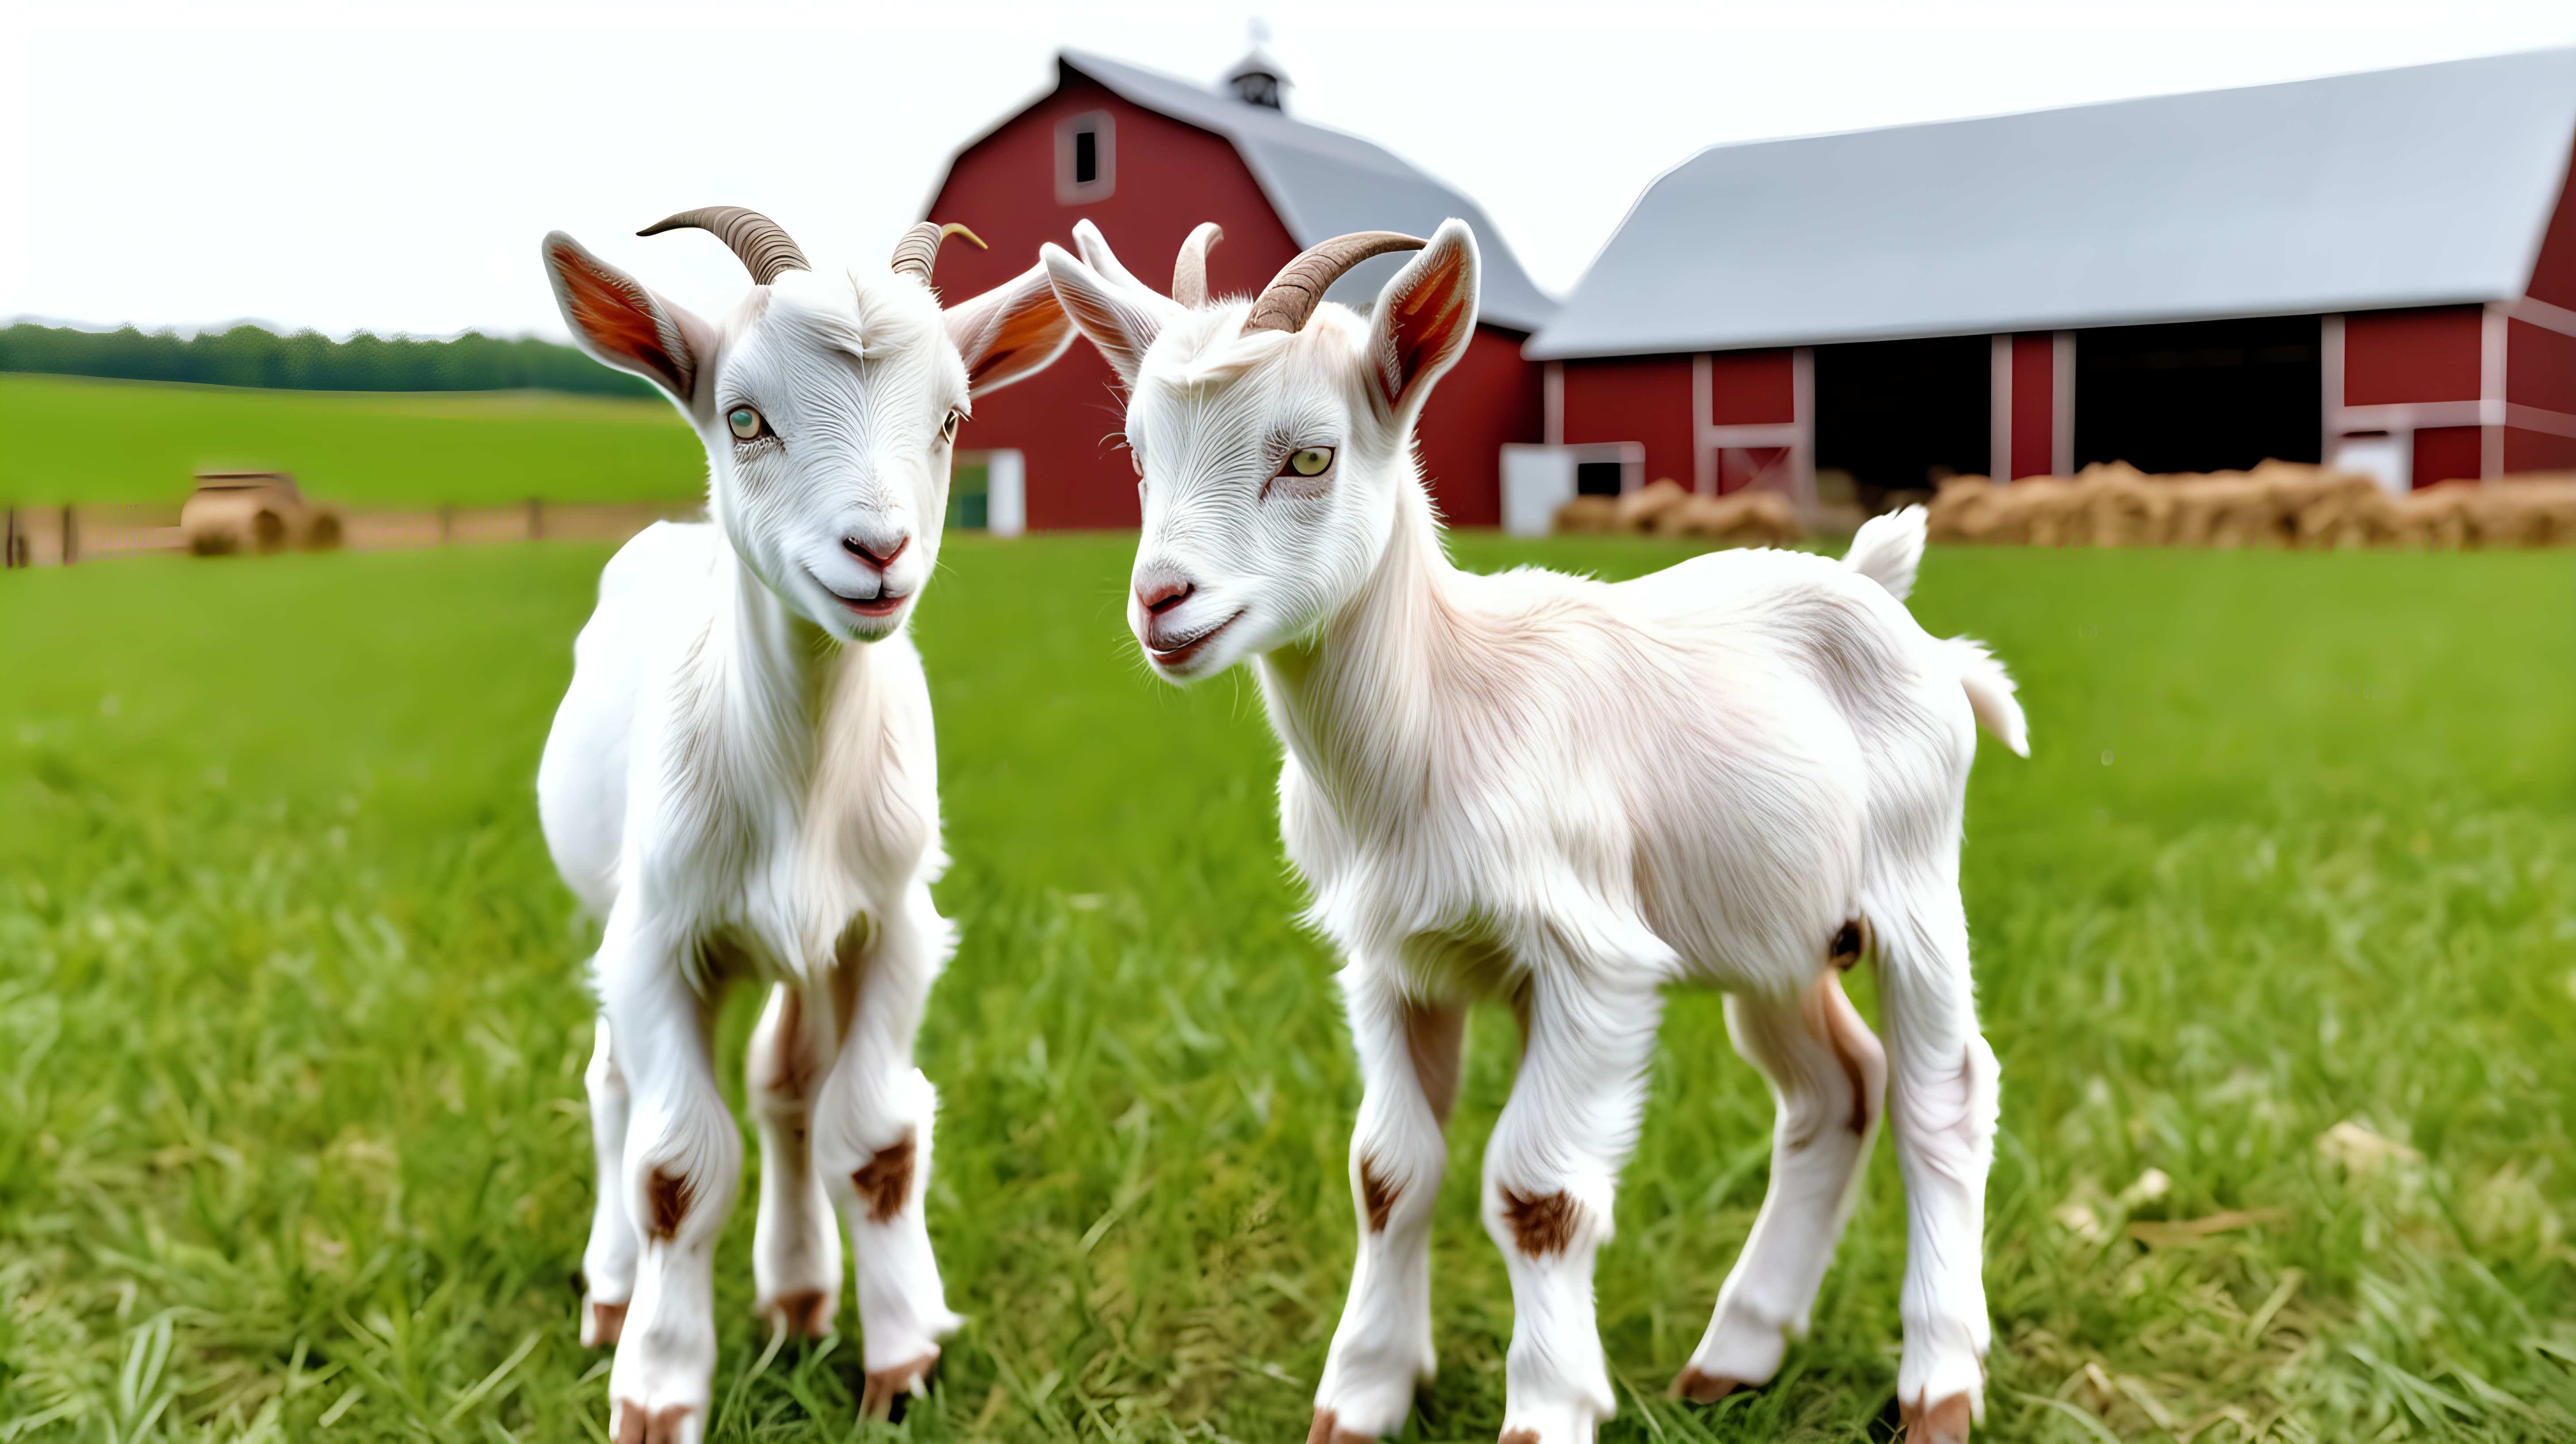 Two baby goat in field farm barn background